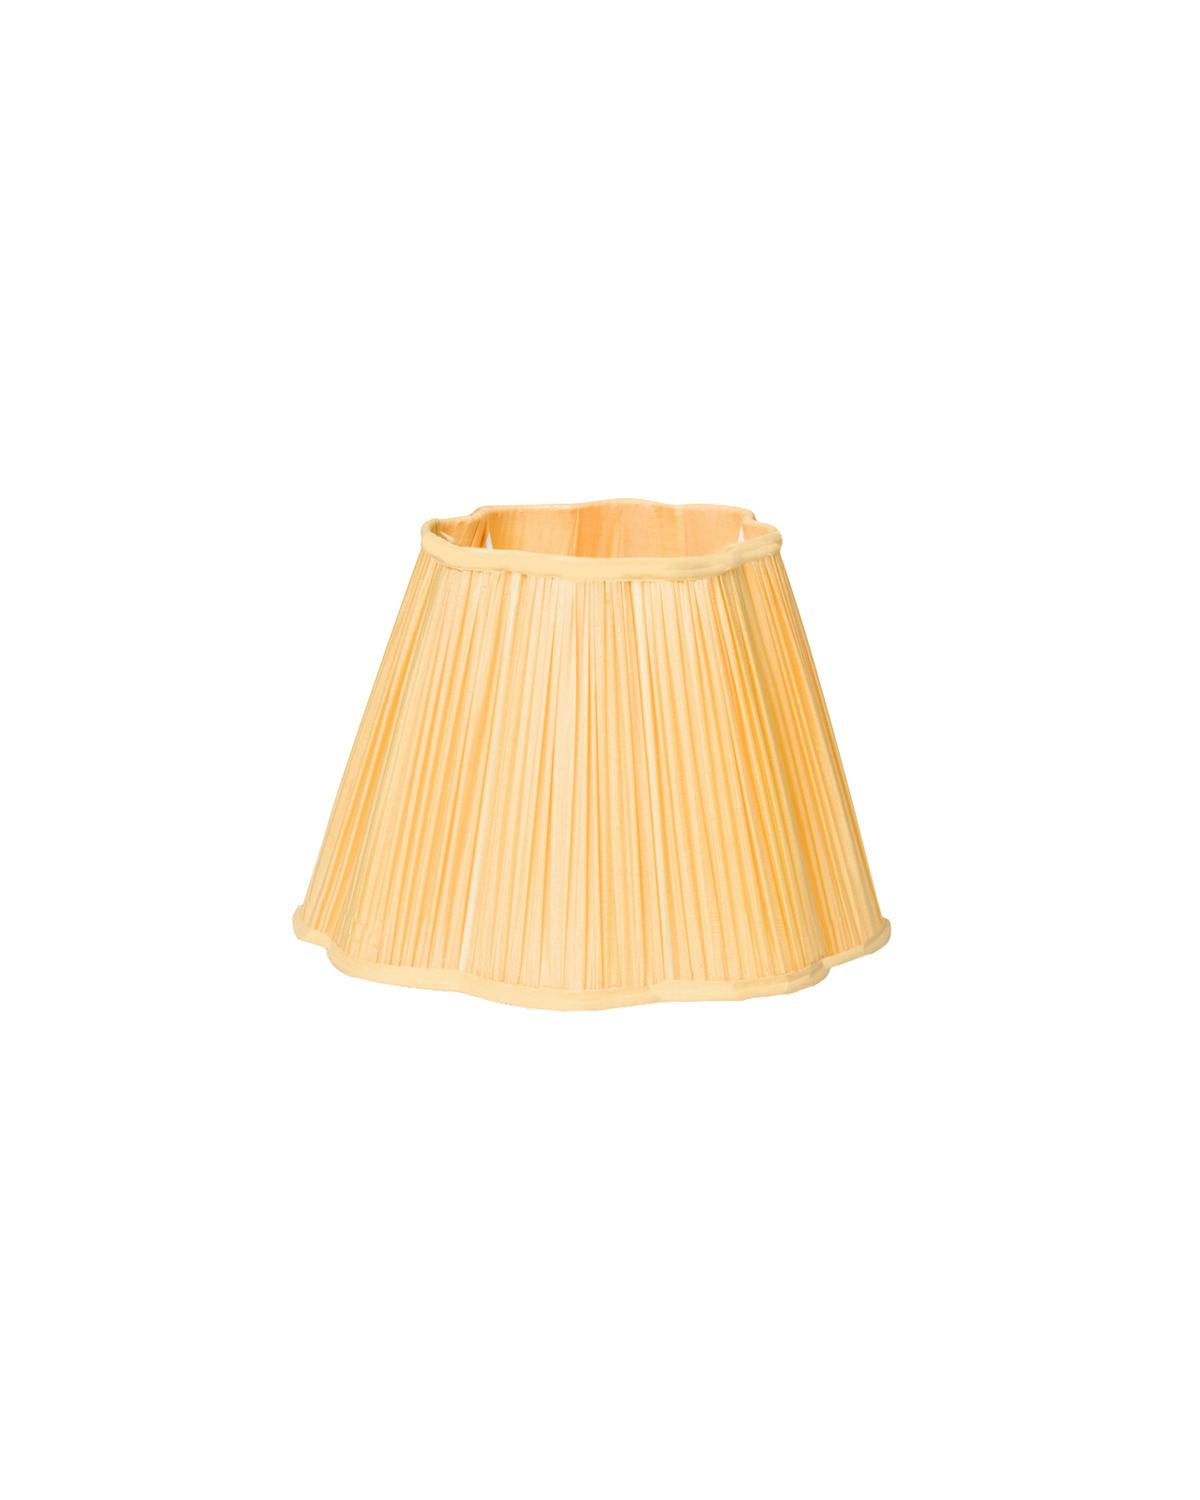 Spring Wavy lampshade, Golden. Image #4